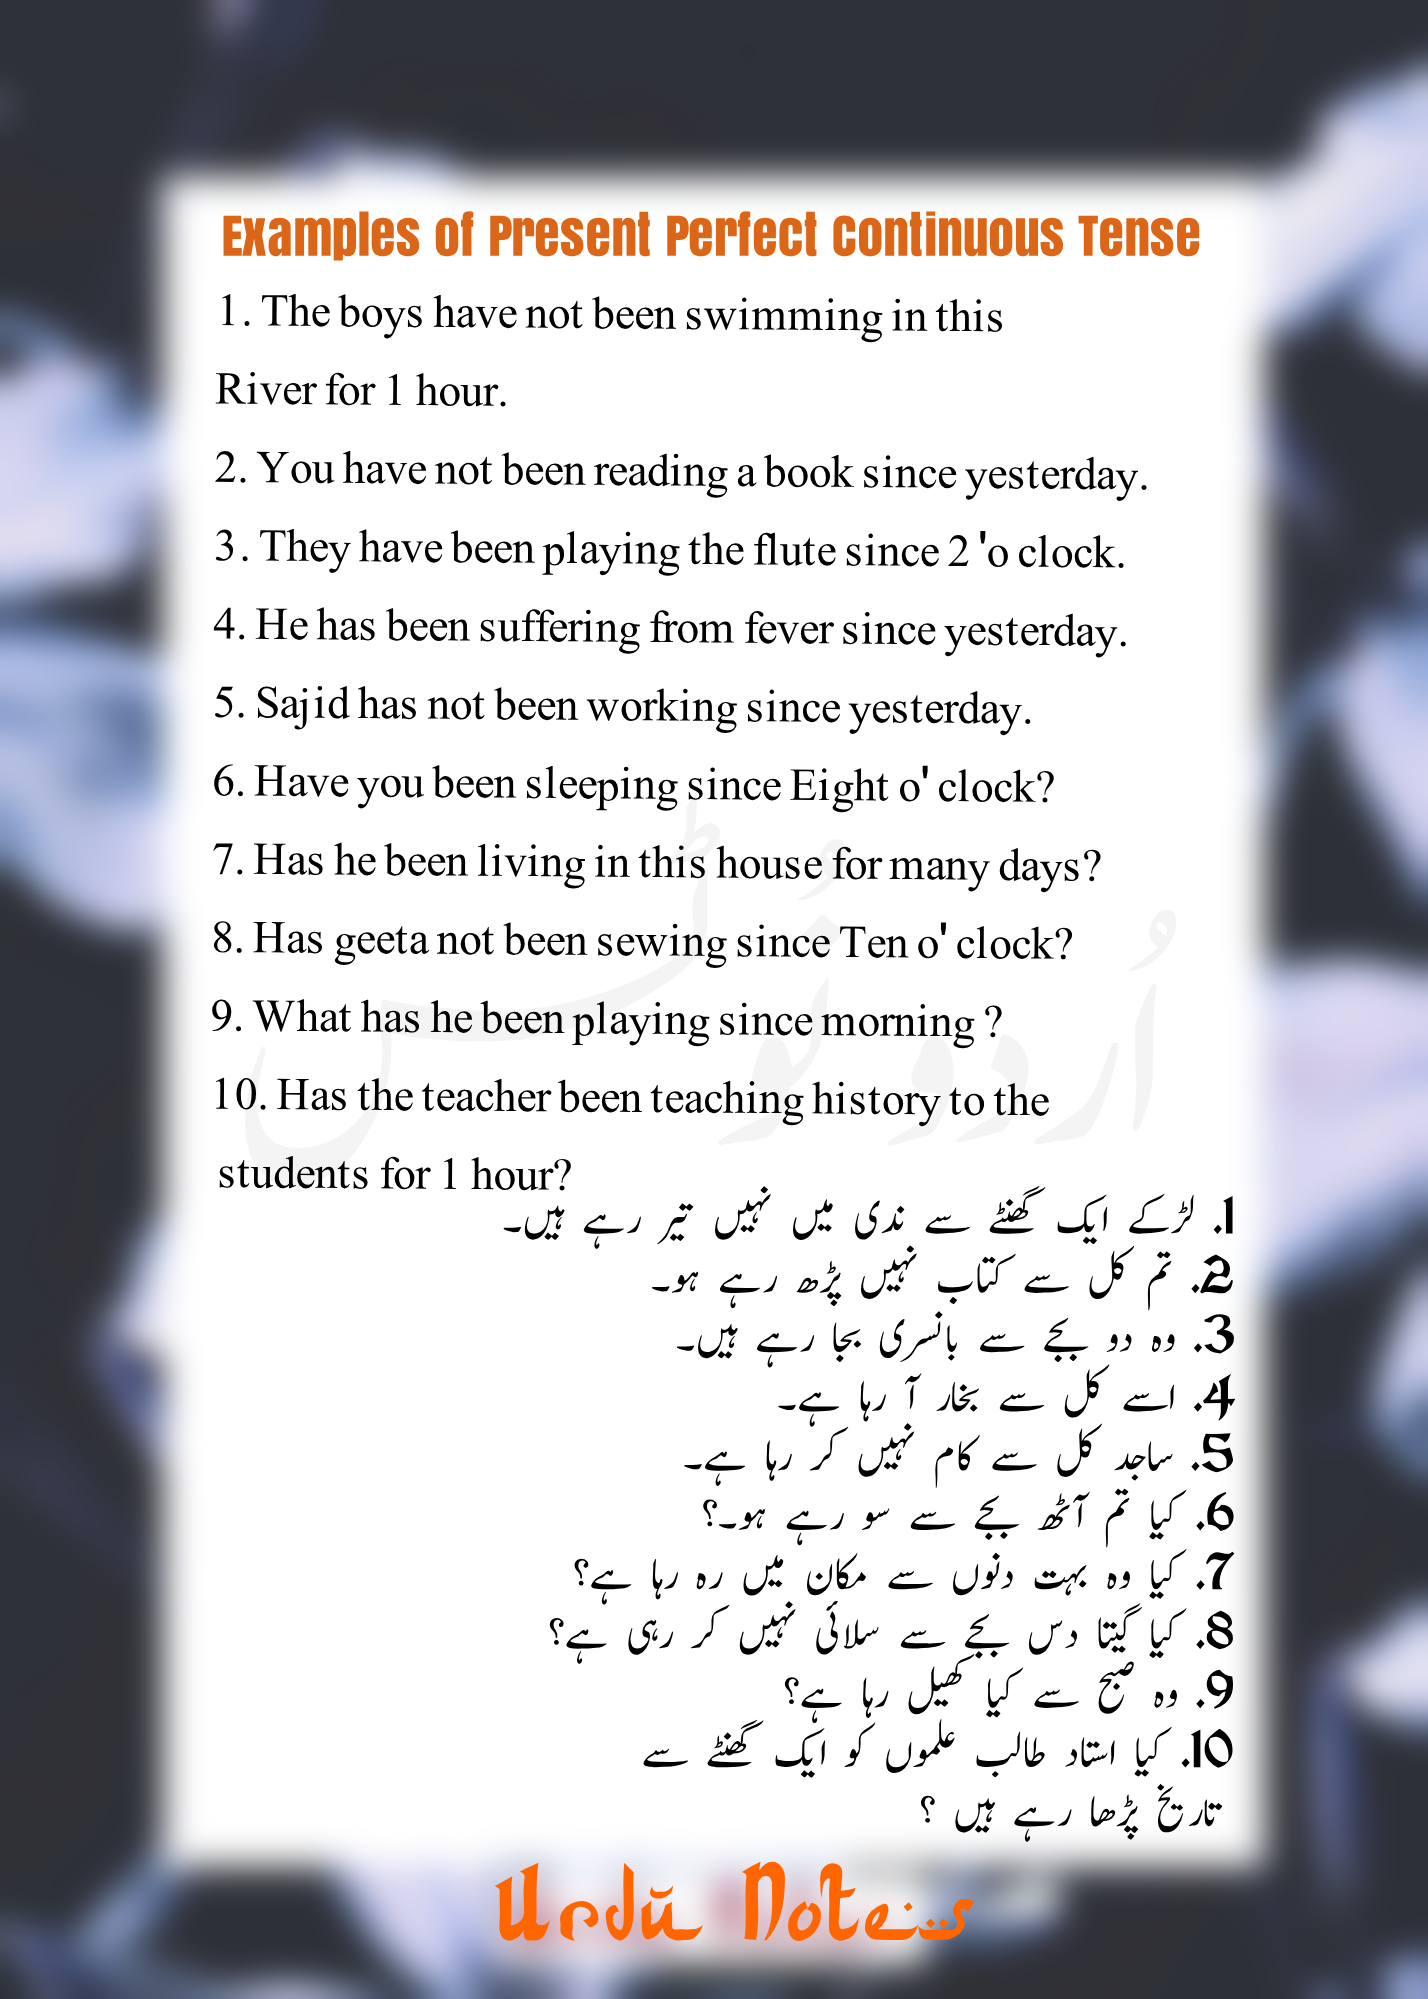 ten-examples-of-present-perfect-continuous-tense-in-urdu-urdu-notes